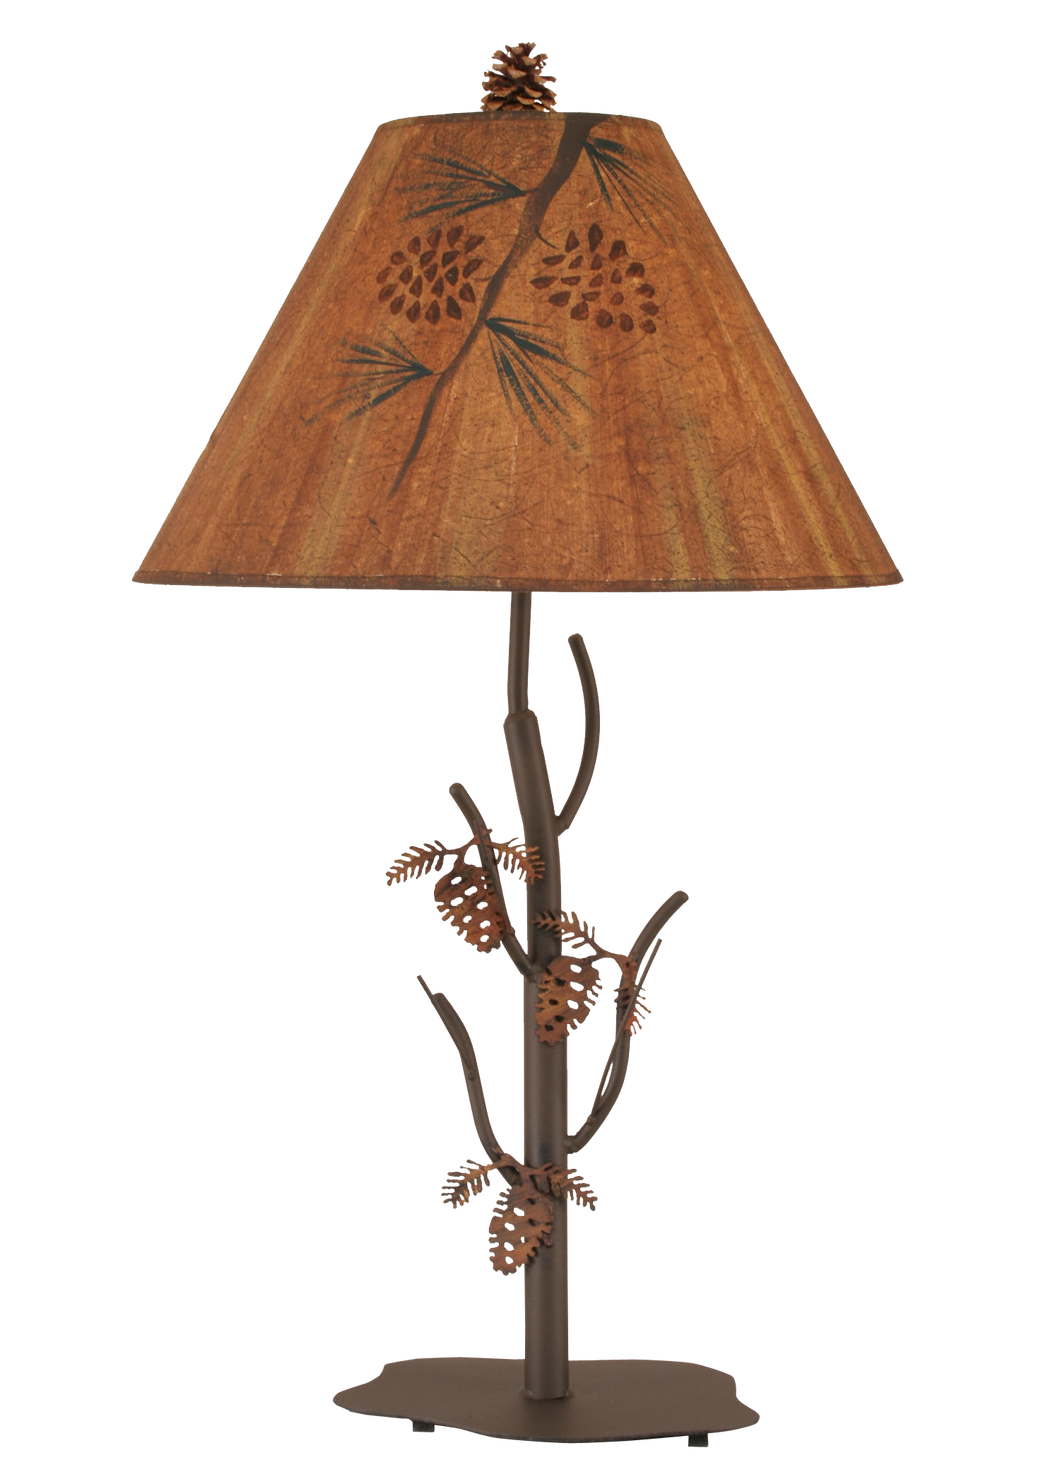 Charred Iron Pine Tree Table Lamp